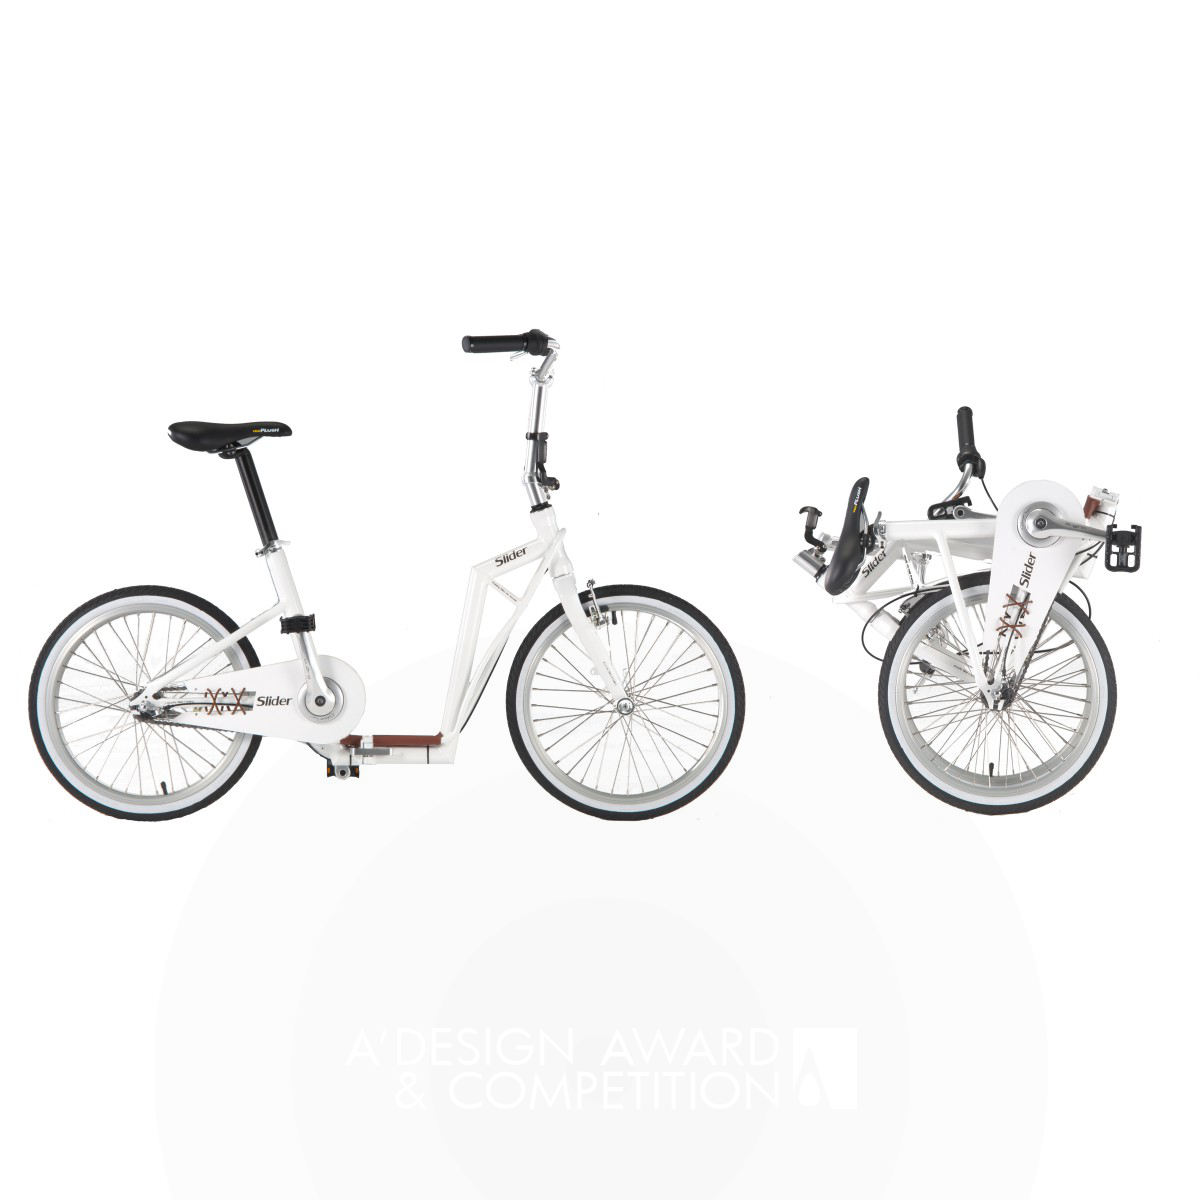 Slider Folding Bike Bicycle by HAOTING Technology Co., LTD.